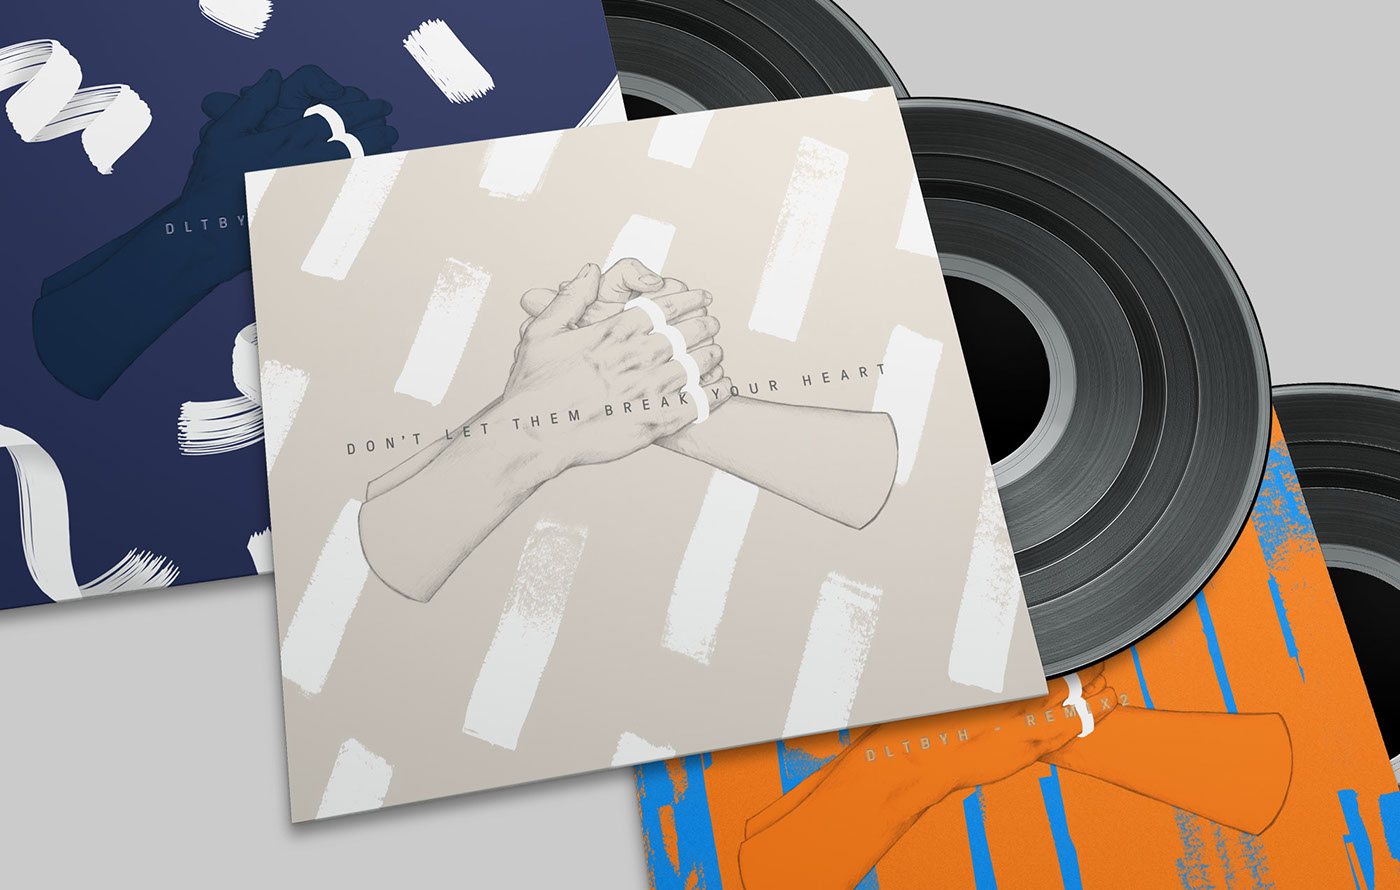 Album art hands brass Knuckles color paint texture record sleeve vinyl band